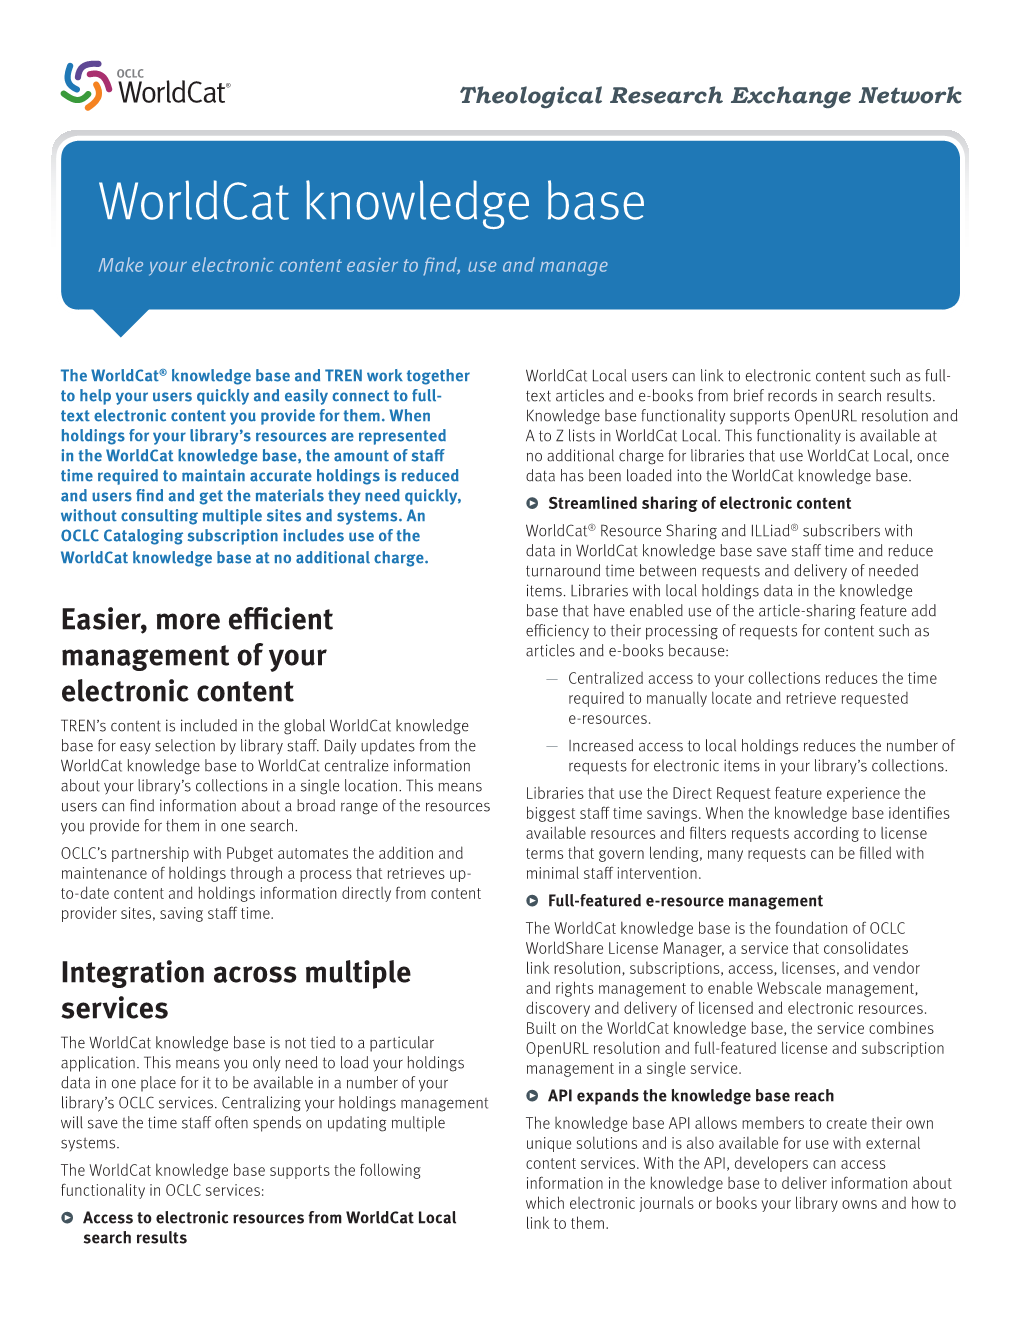 Worldcat Knowledge Base Partnership TREN